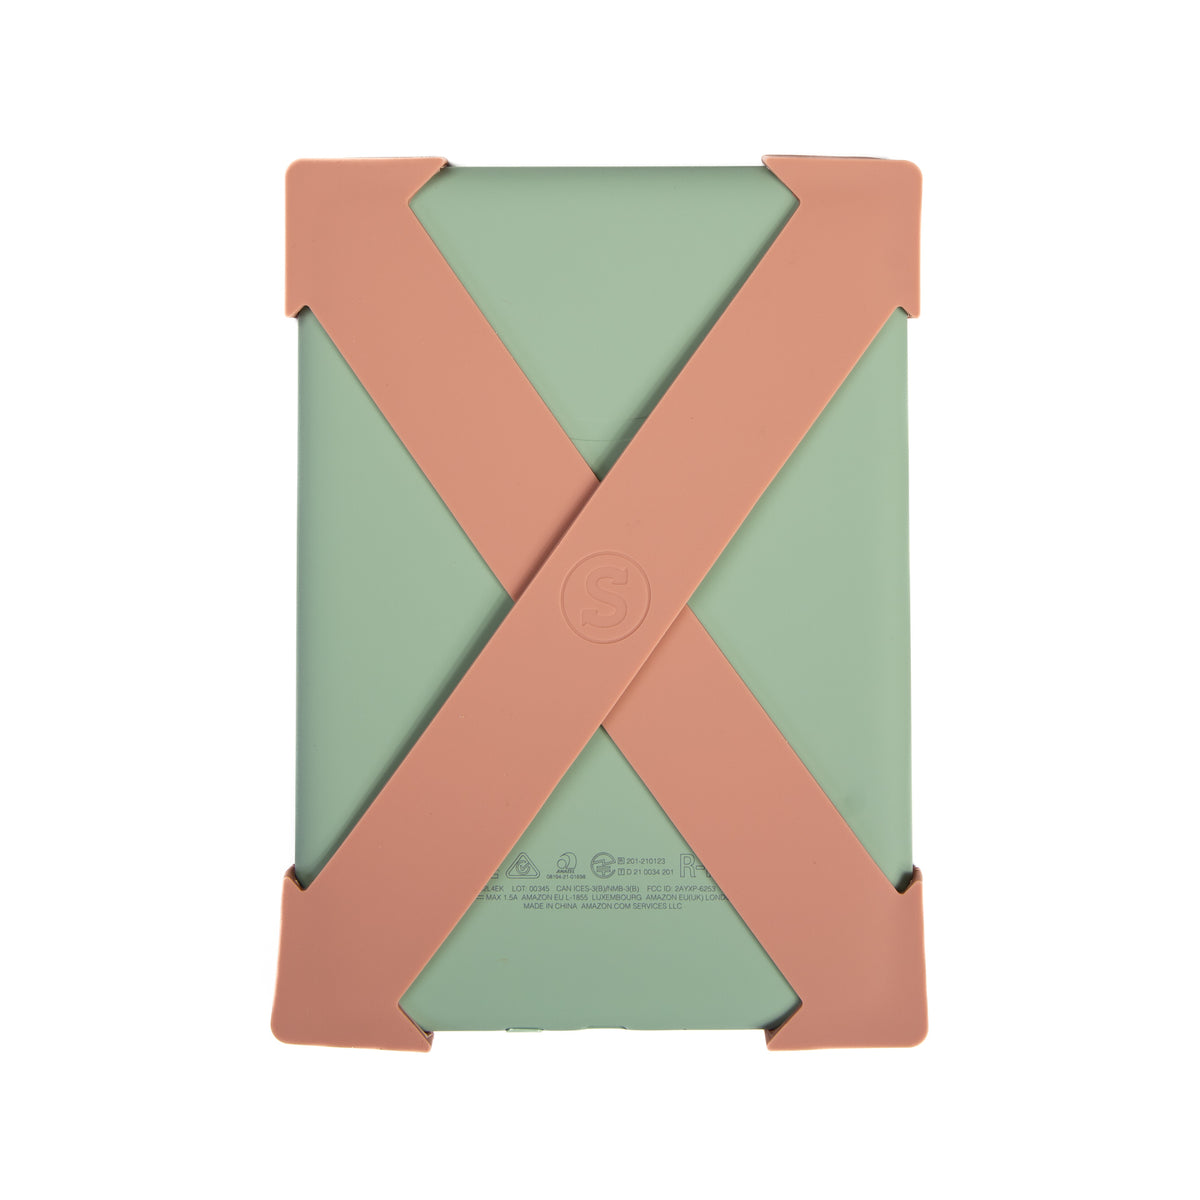 Strapsicle Kindle + Kobo straps